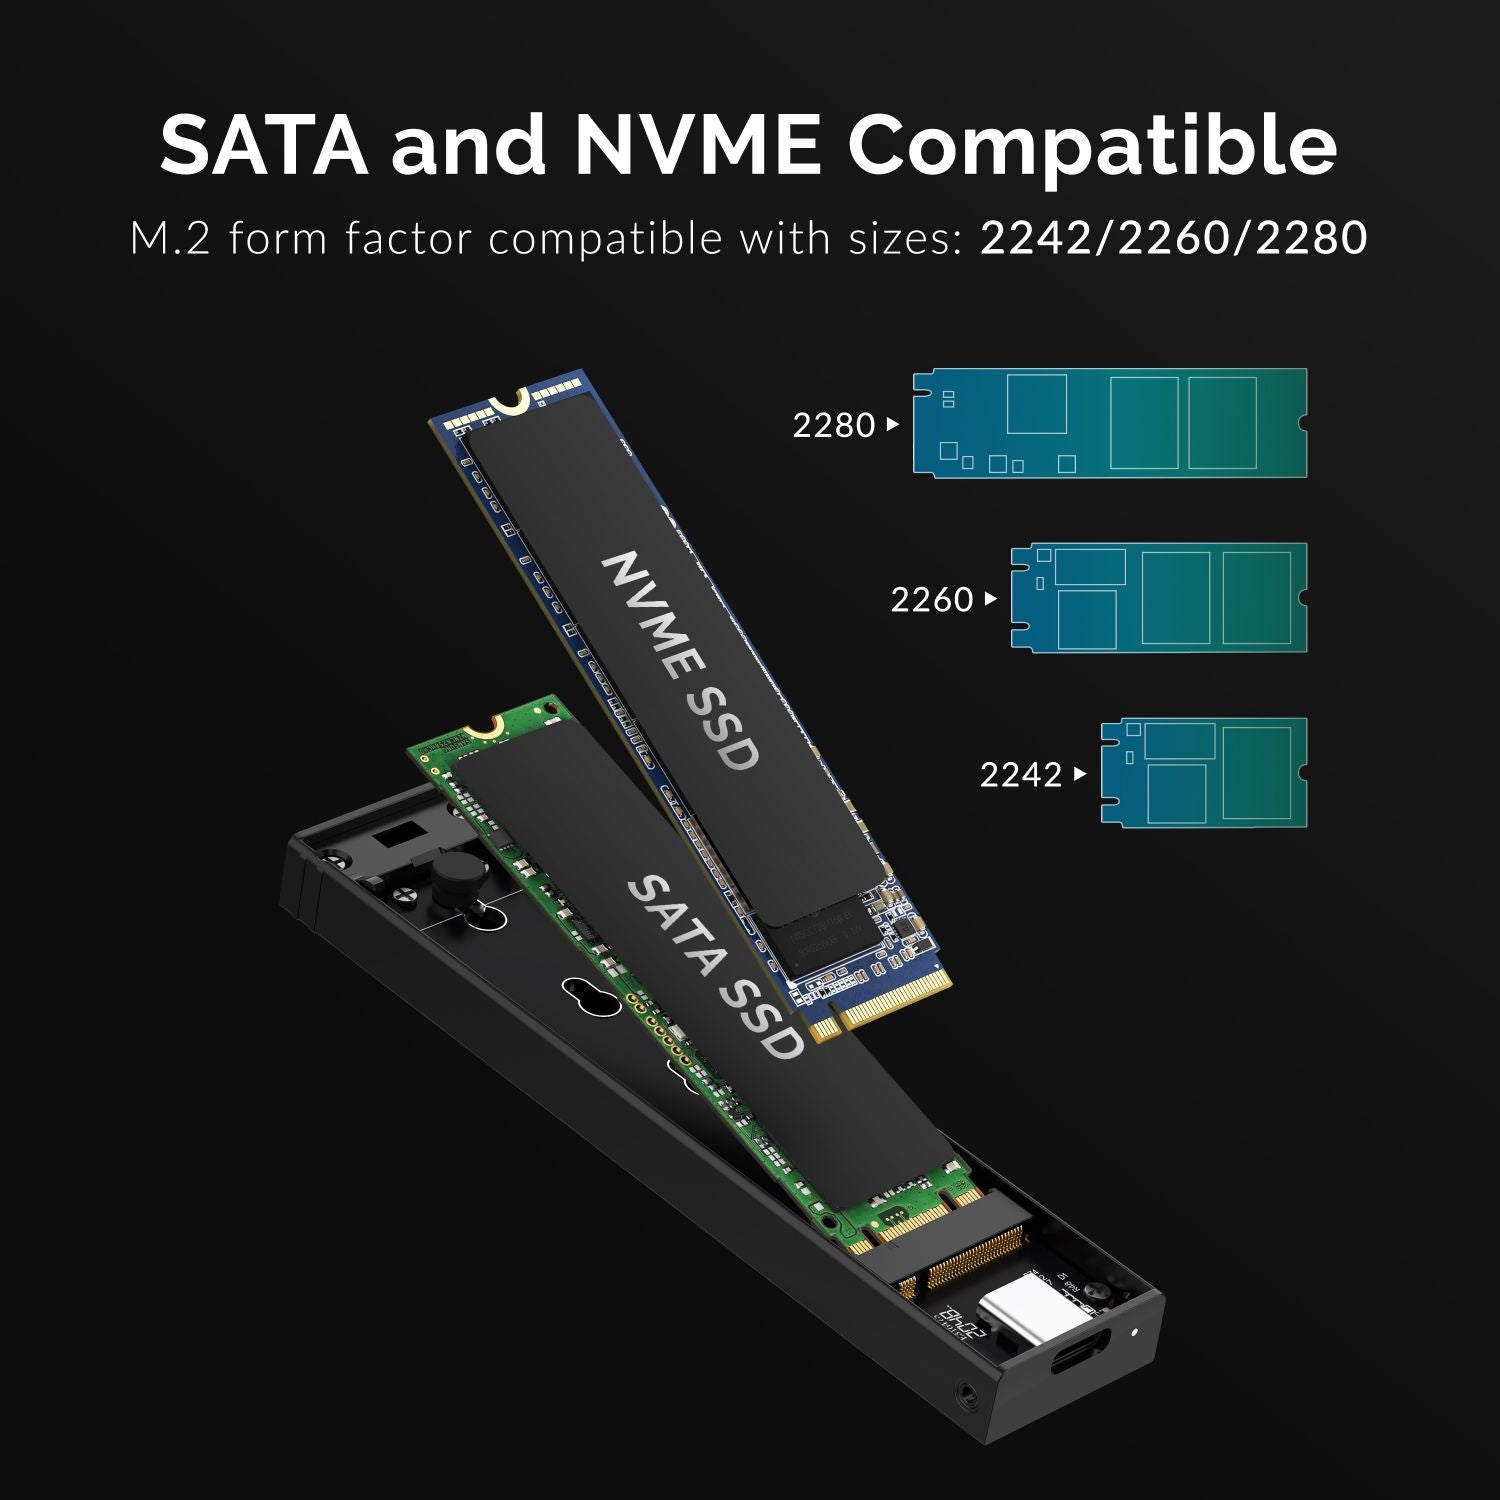 Sabrent USB 3.2 Type C Tool Free Enclosure for M.2 PCIe NVMe and SATA SSDs (EC-SNVE)